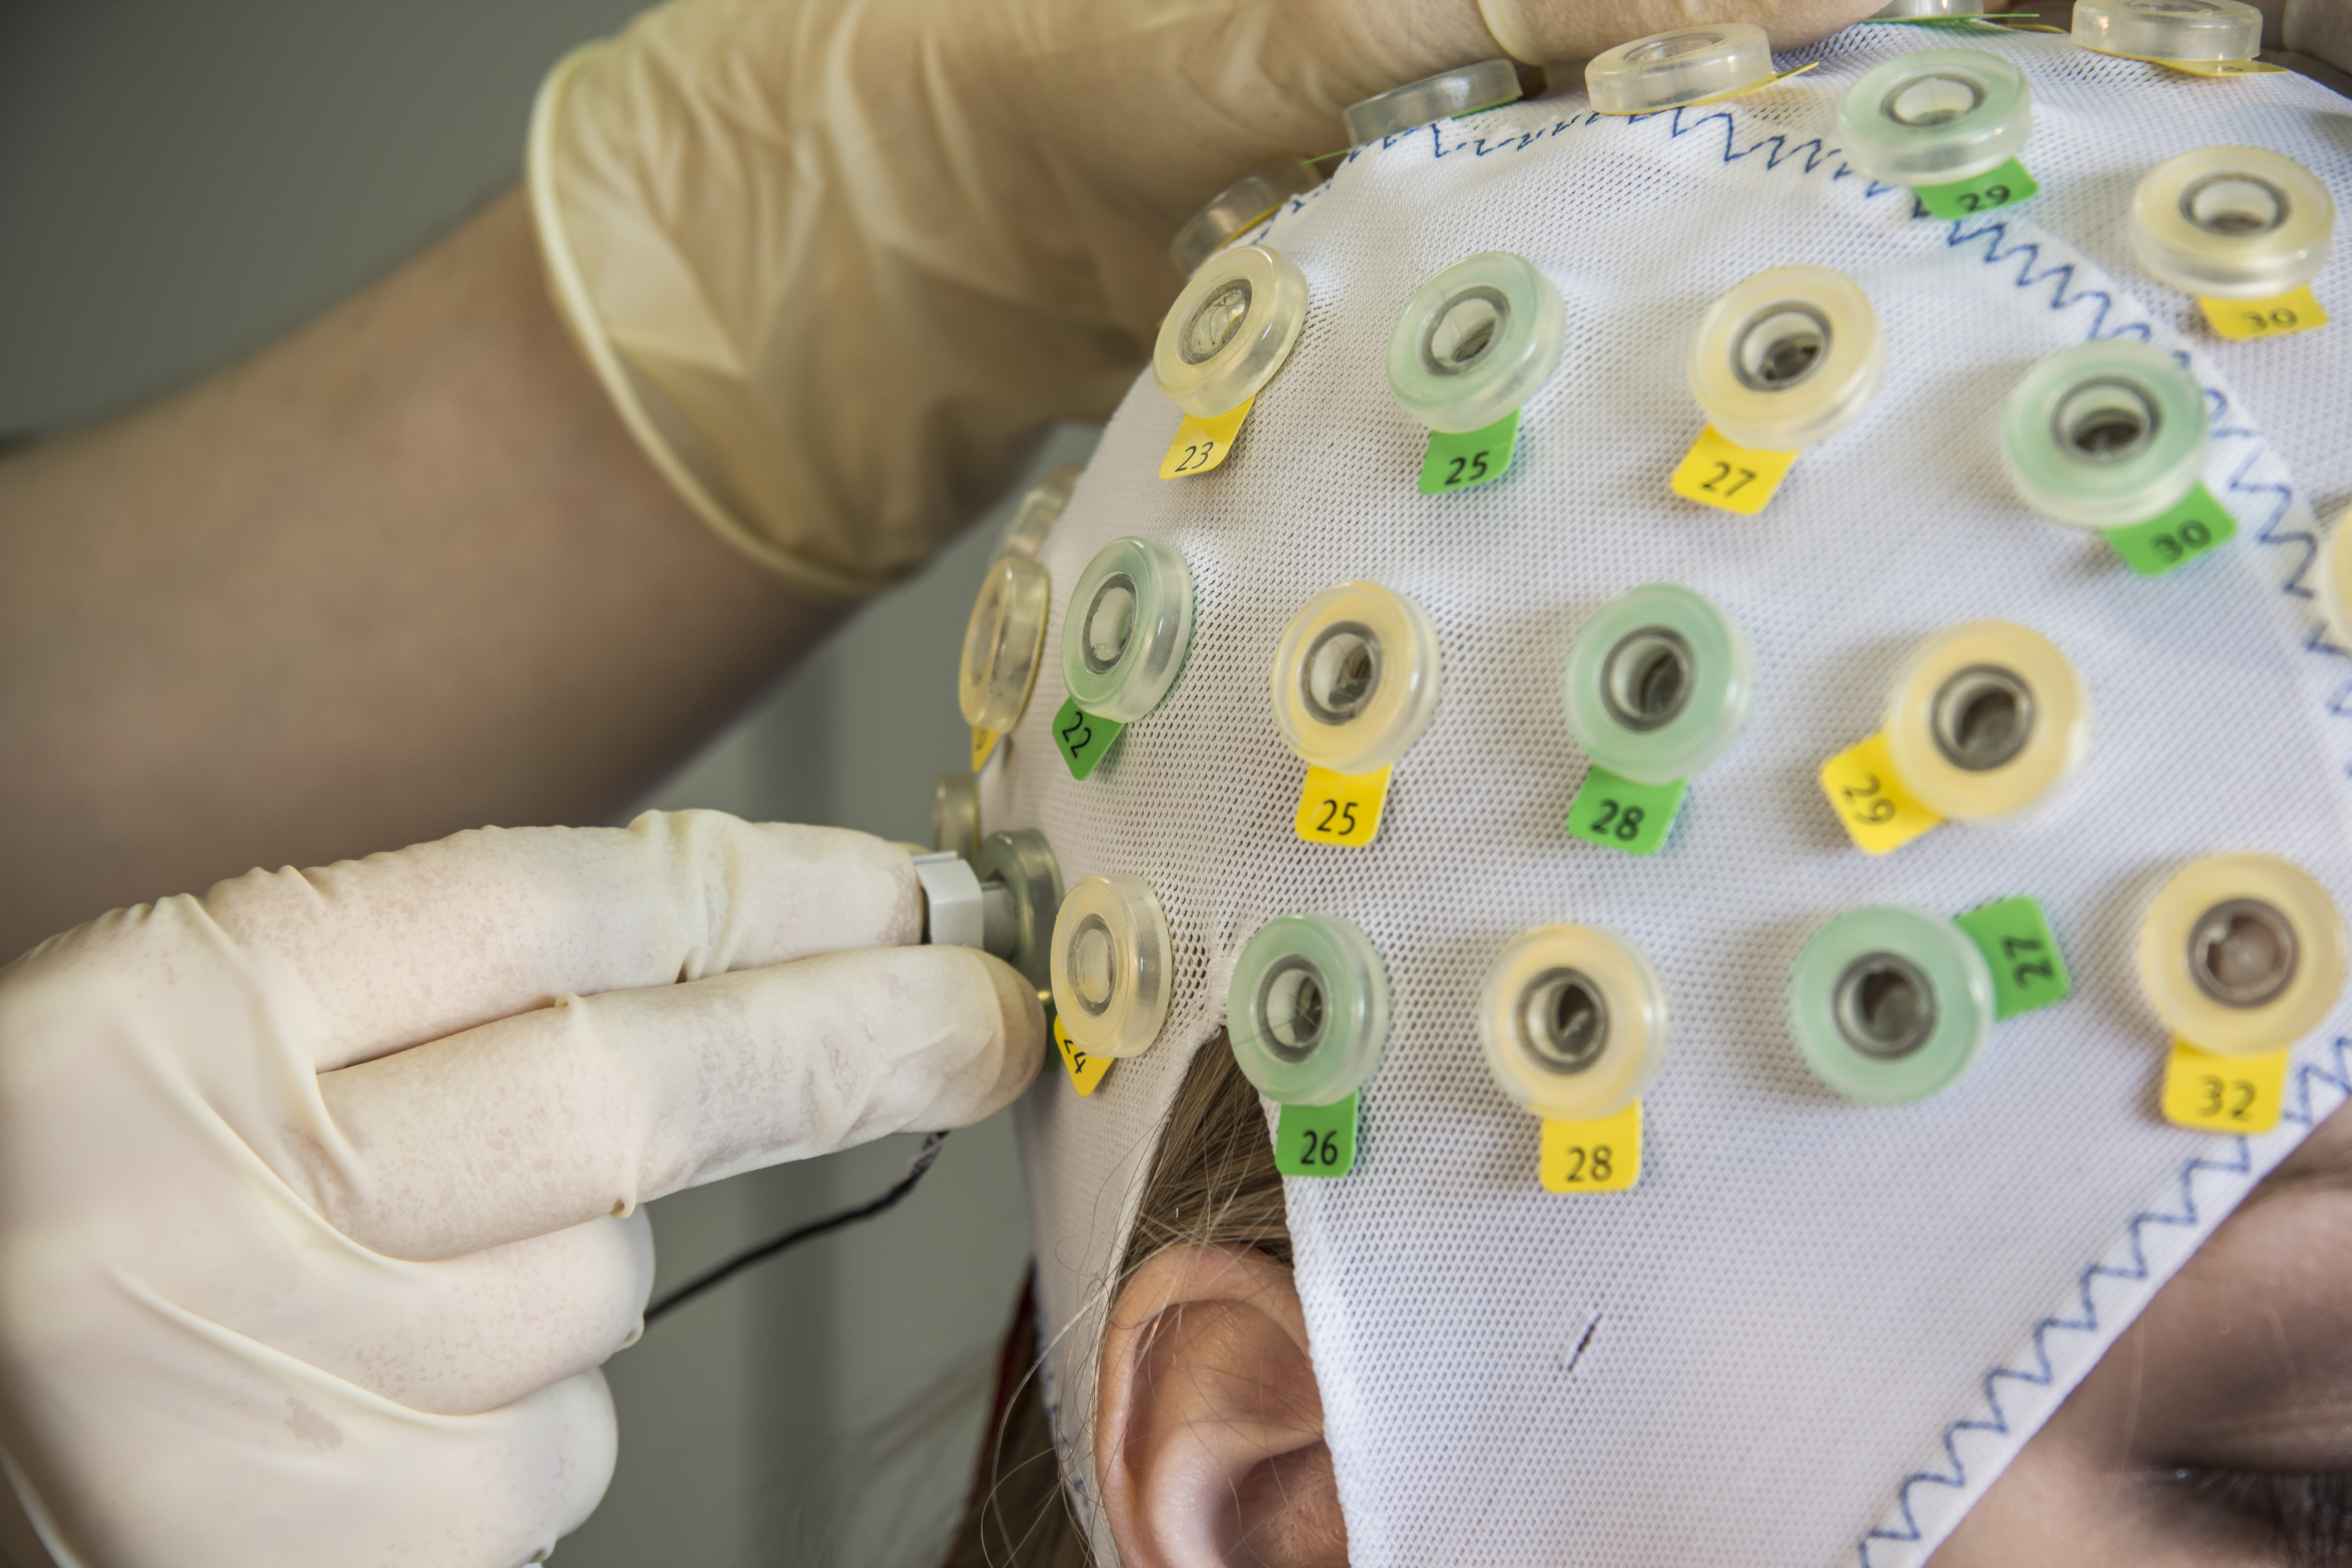 Application of EEG electrodes to an EEG cap